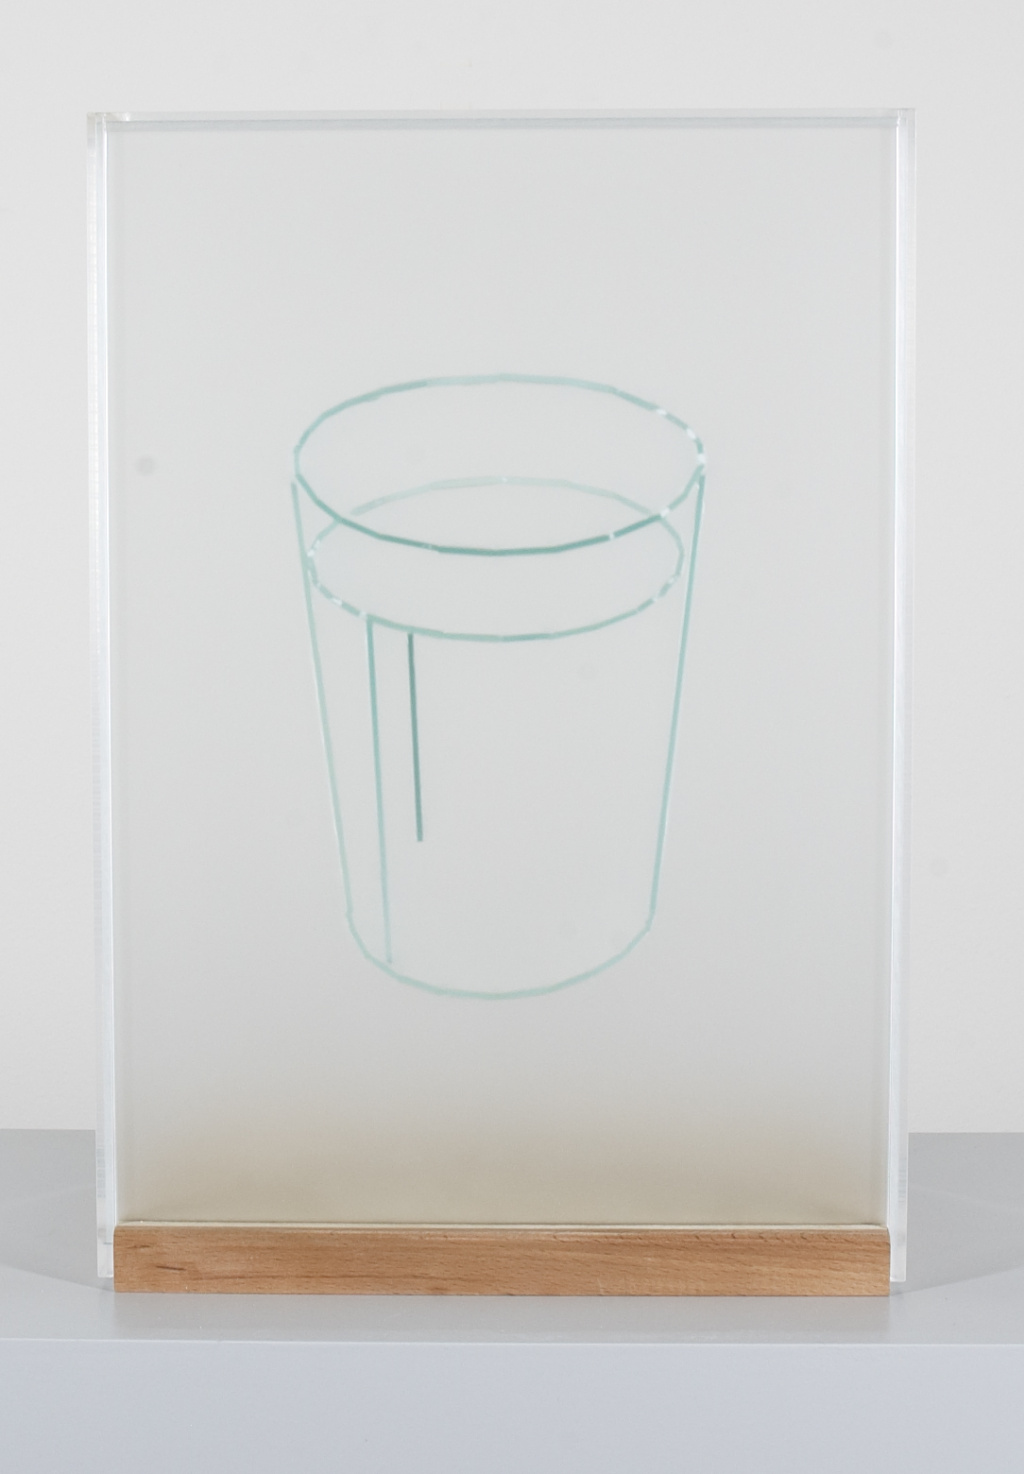 Hugo Suter
Zeichnung (Glas). 2002
Glas, Holz, Plexiglas, Wood, Glass, Plexy
40 x 27,5 x 15 cm 